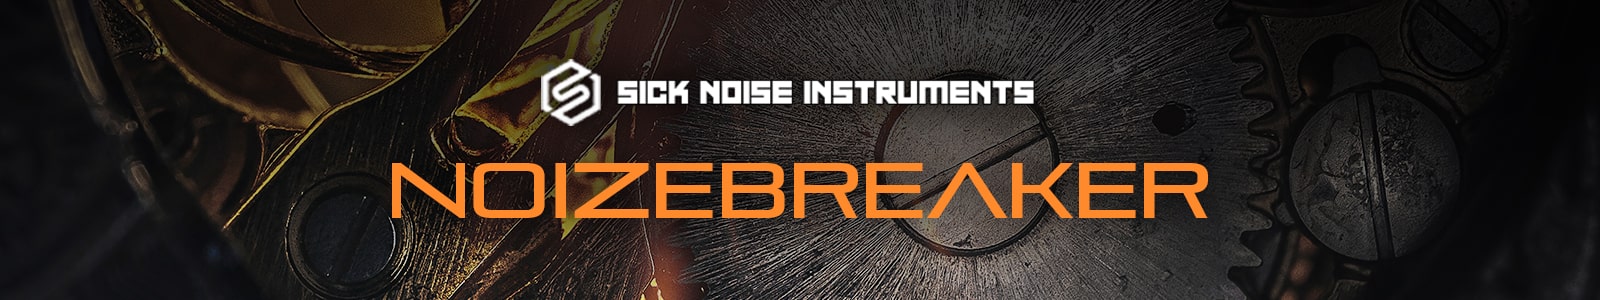 Sick Noise Instruments NoizeBreaker